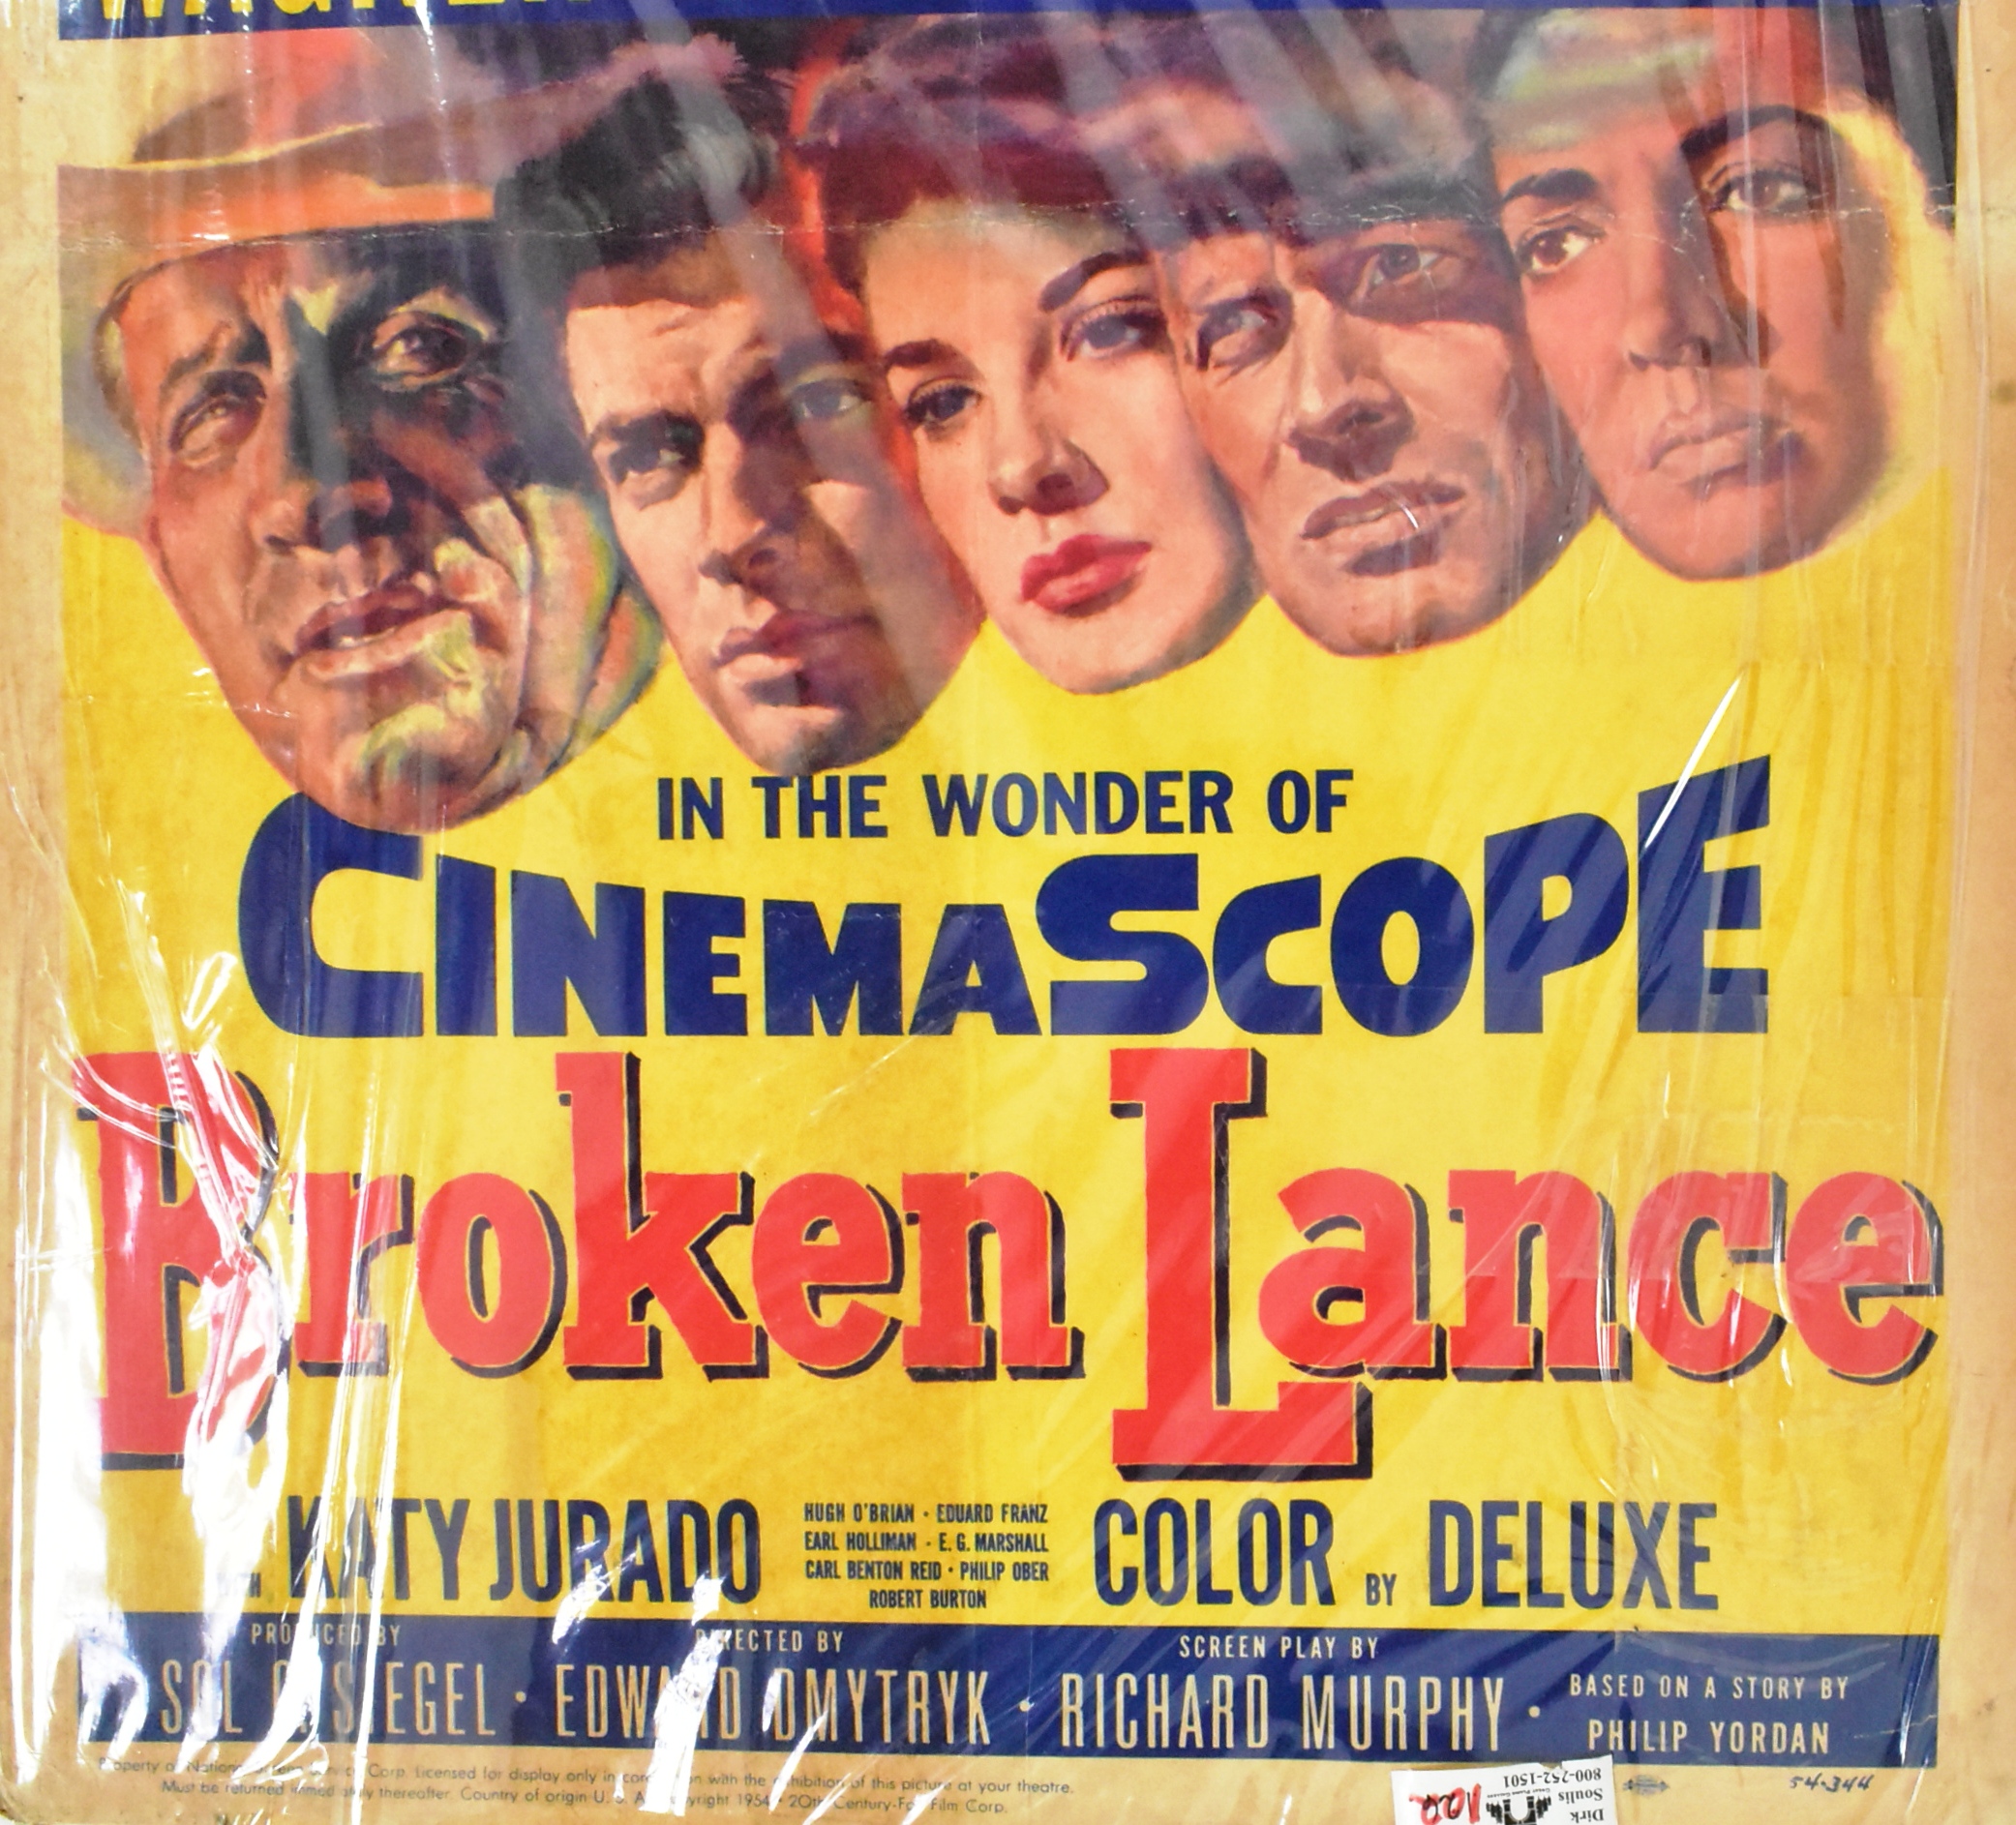 BROKEN LANCE (1954 WESTERN) - ORIGINAL SHOW CARD MOVIE POSTER - Image 3 of 3